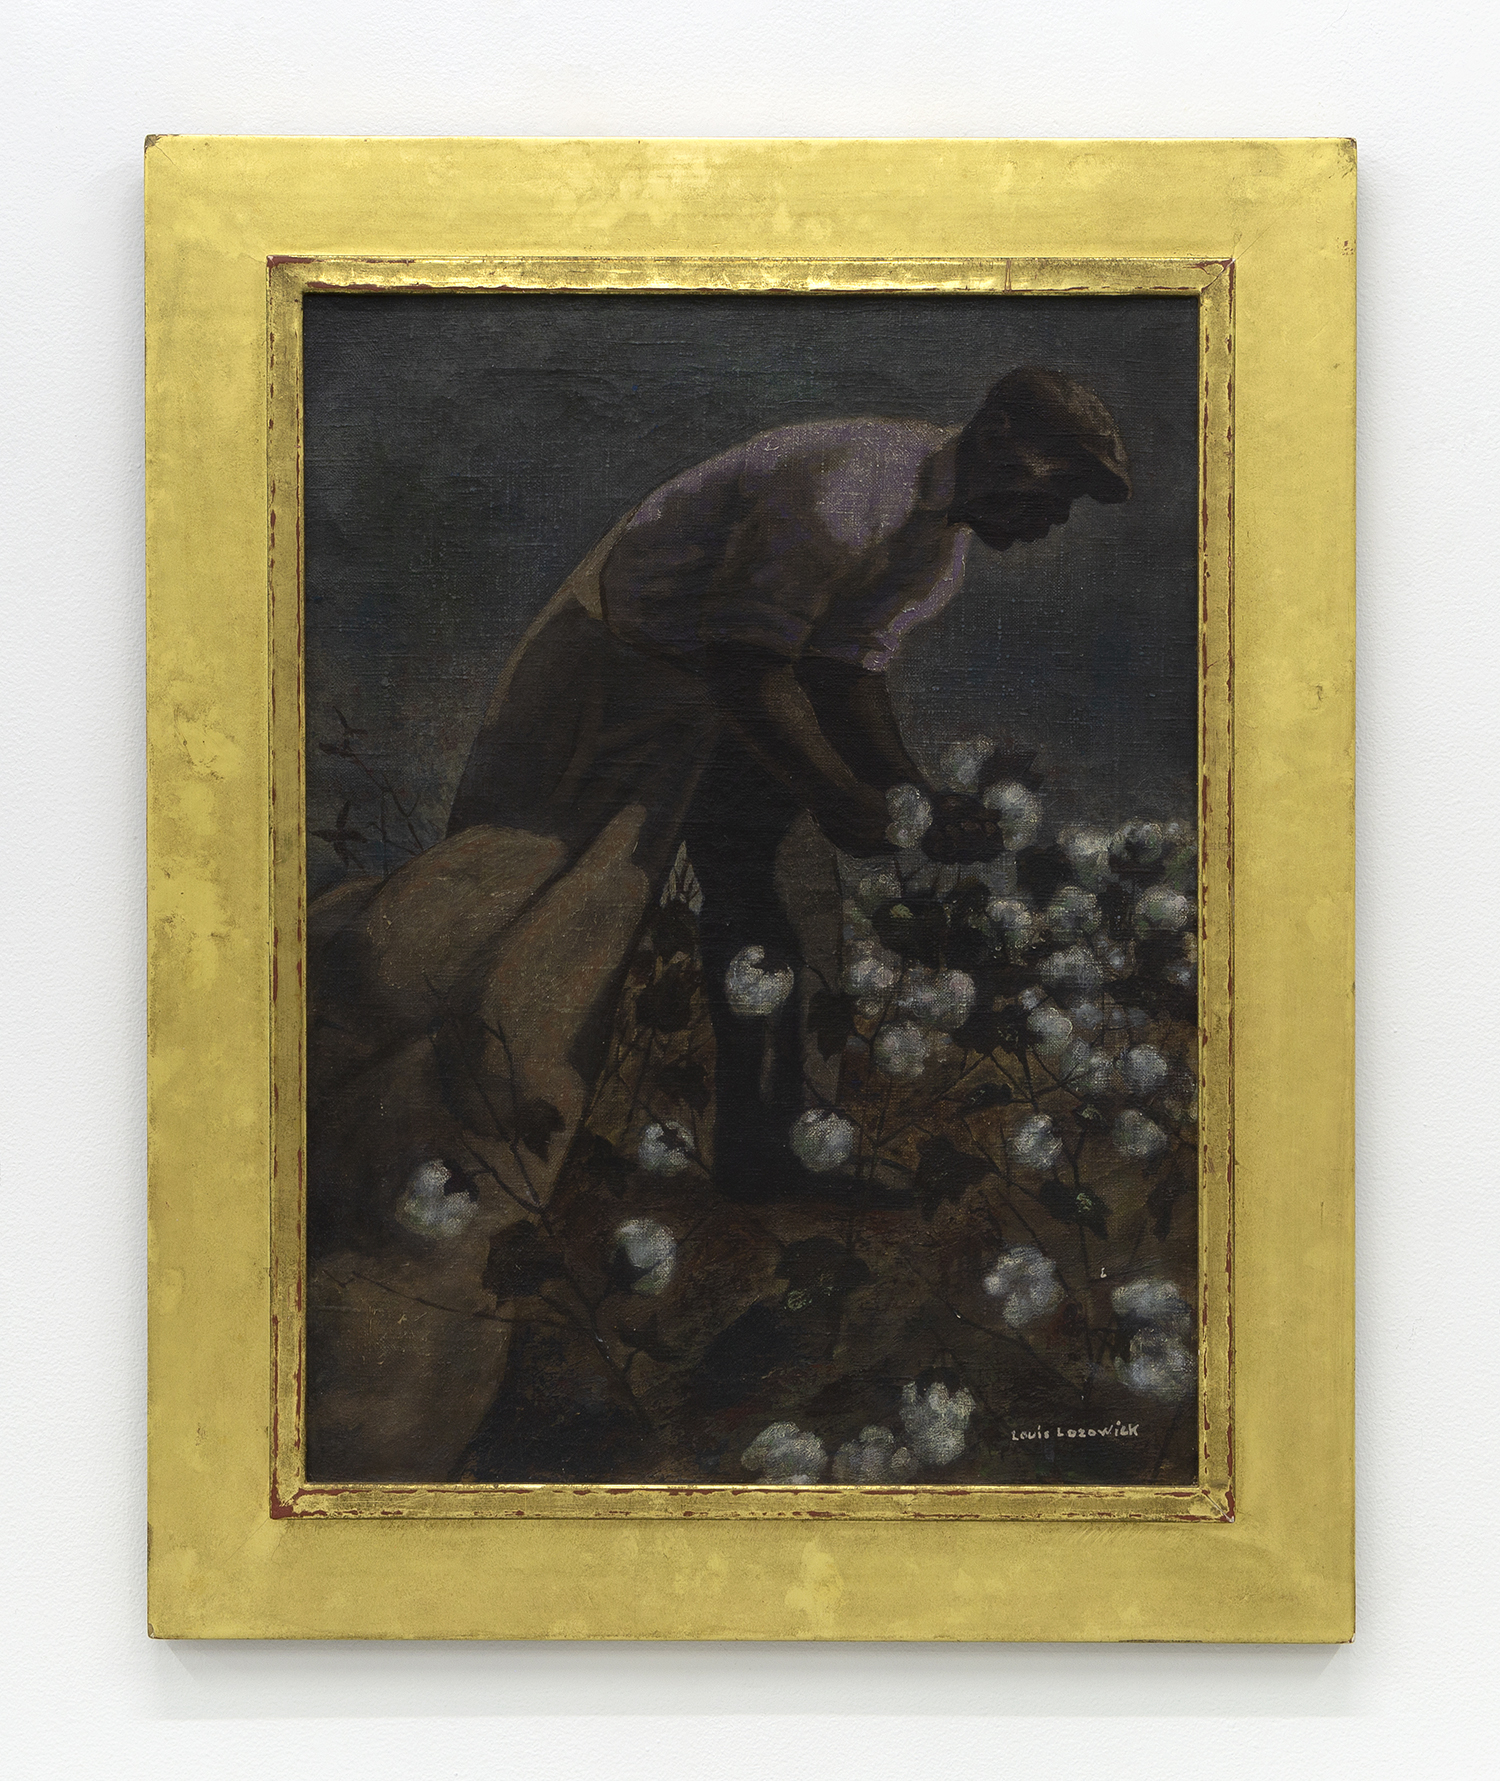 Louis Lozowick Cotton Picker, c. 1940 Oil on canvas 24 x 18 inches (61 x 45.7 cm)